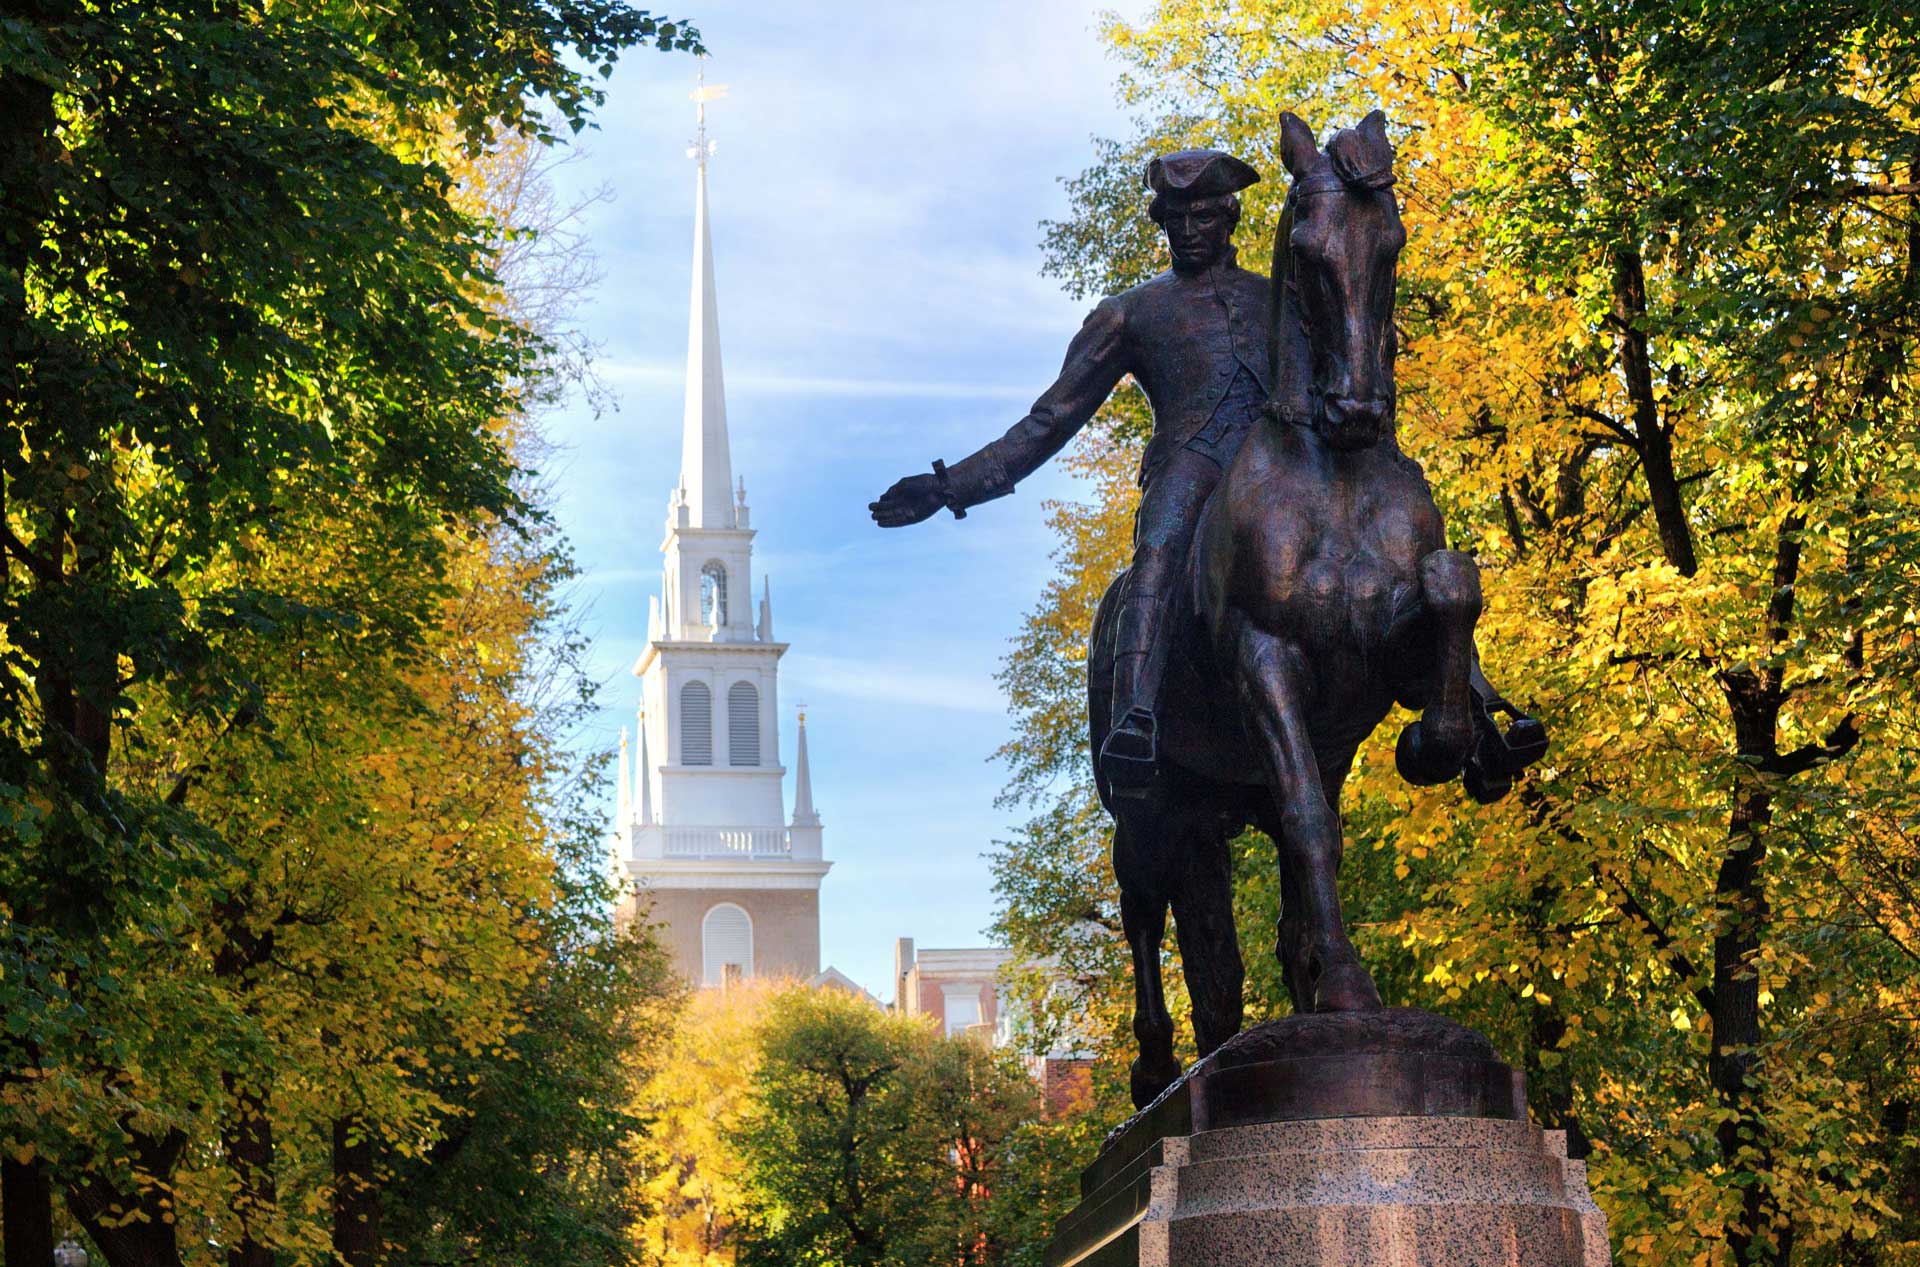 Statue of Paul Revere on horse